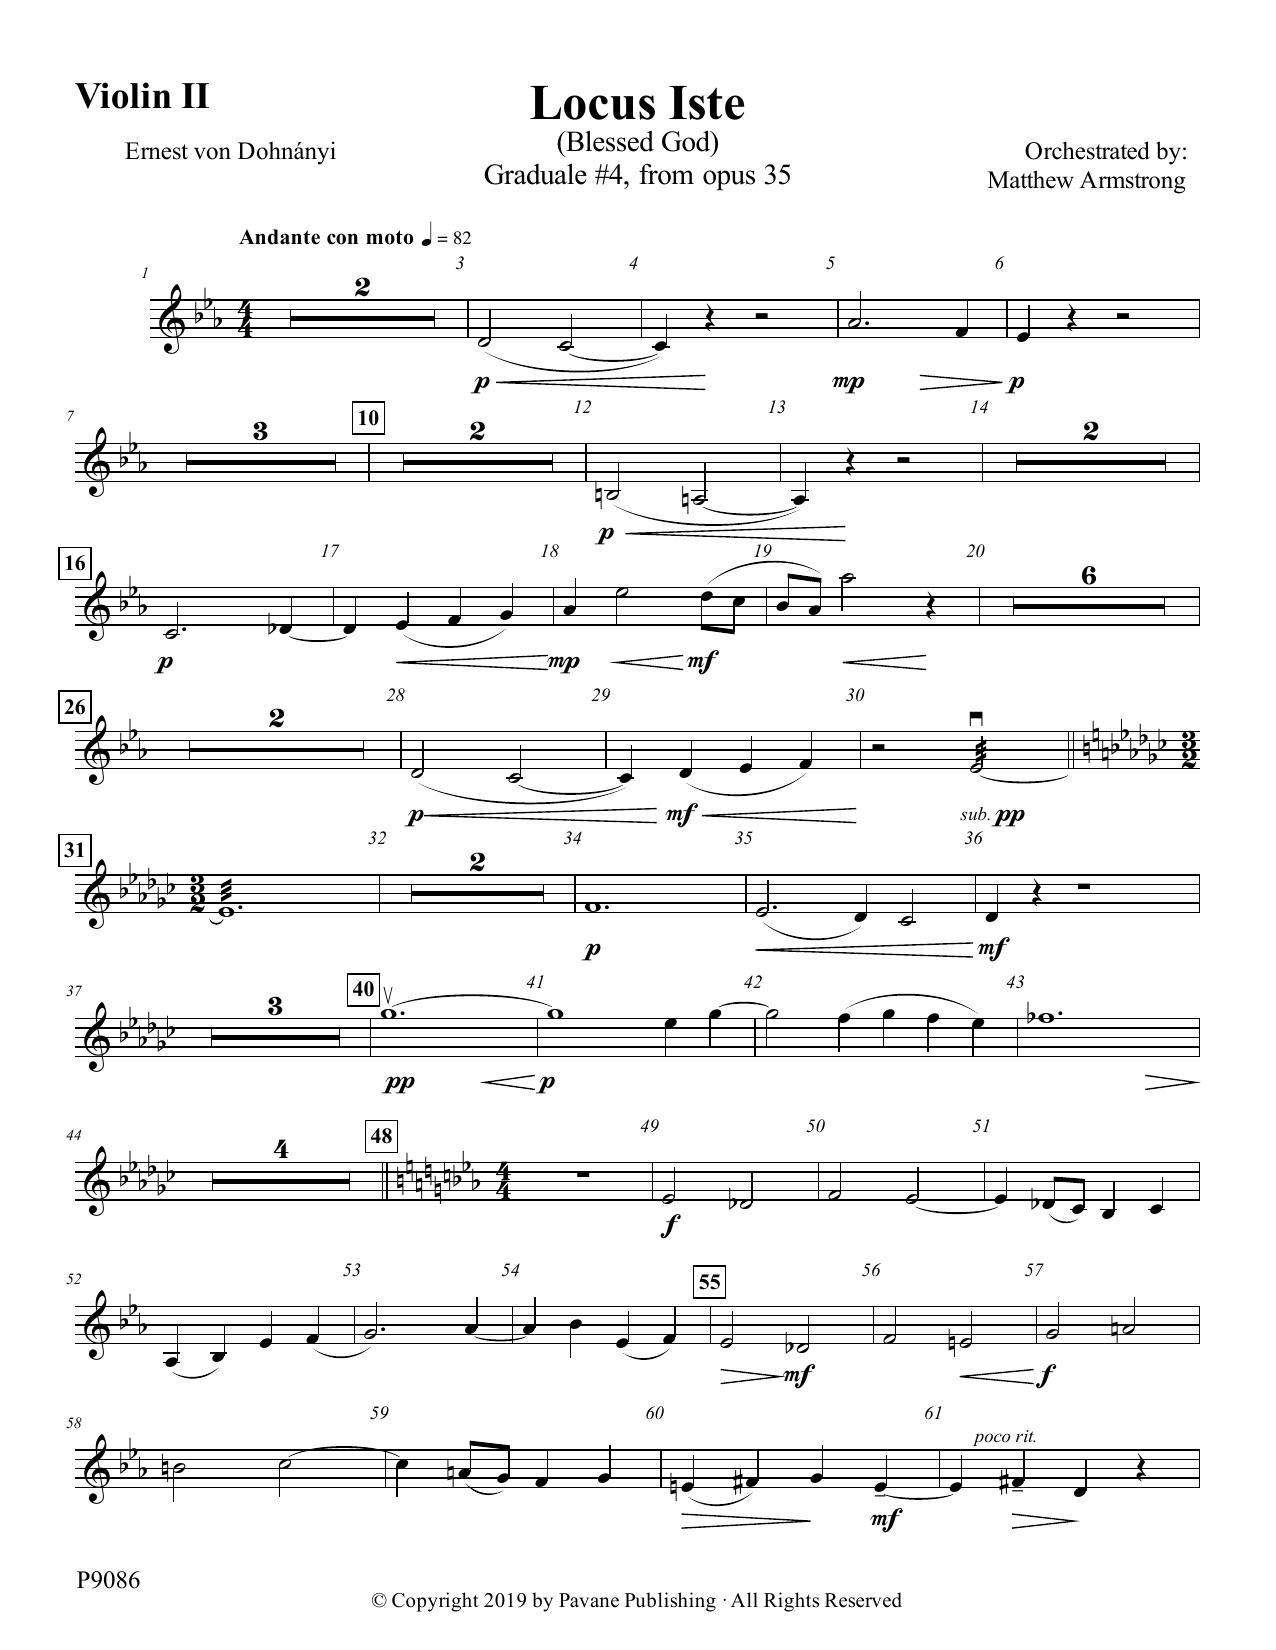 Matthew Armstrong Locus Iste - Violin II Sheet Music Notes & Chords for Choir Instrumental Pak - Download or Print PDF